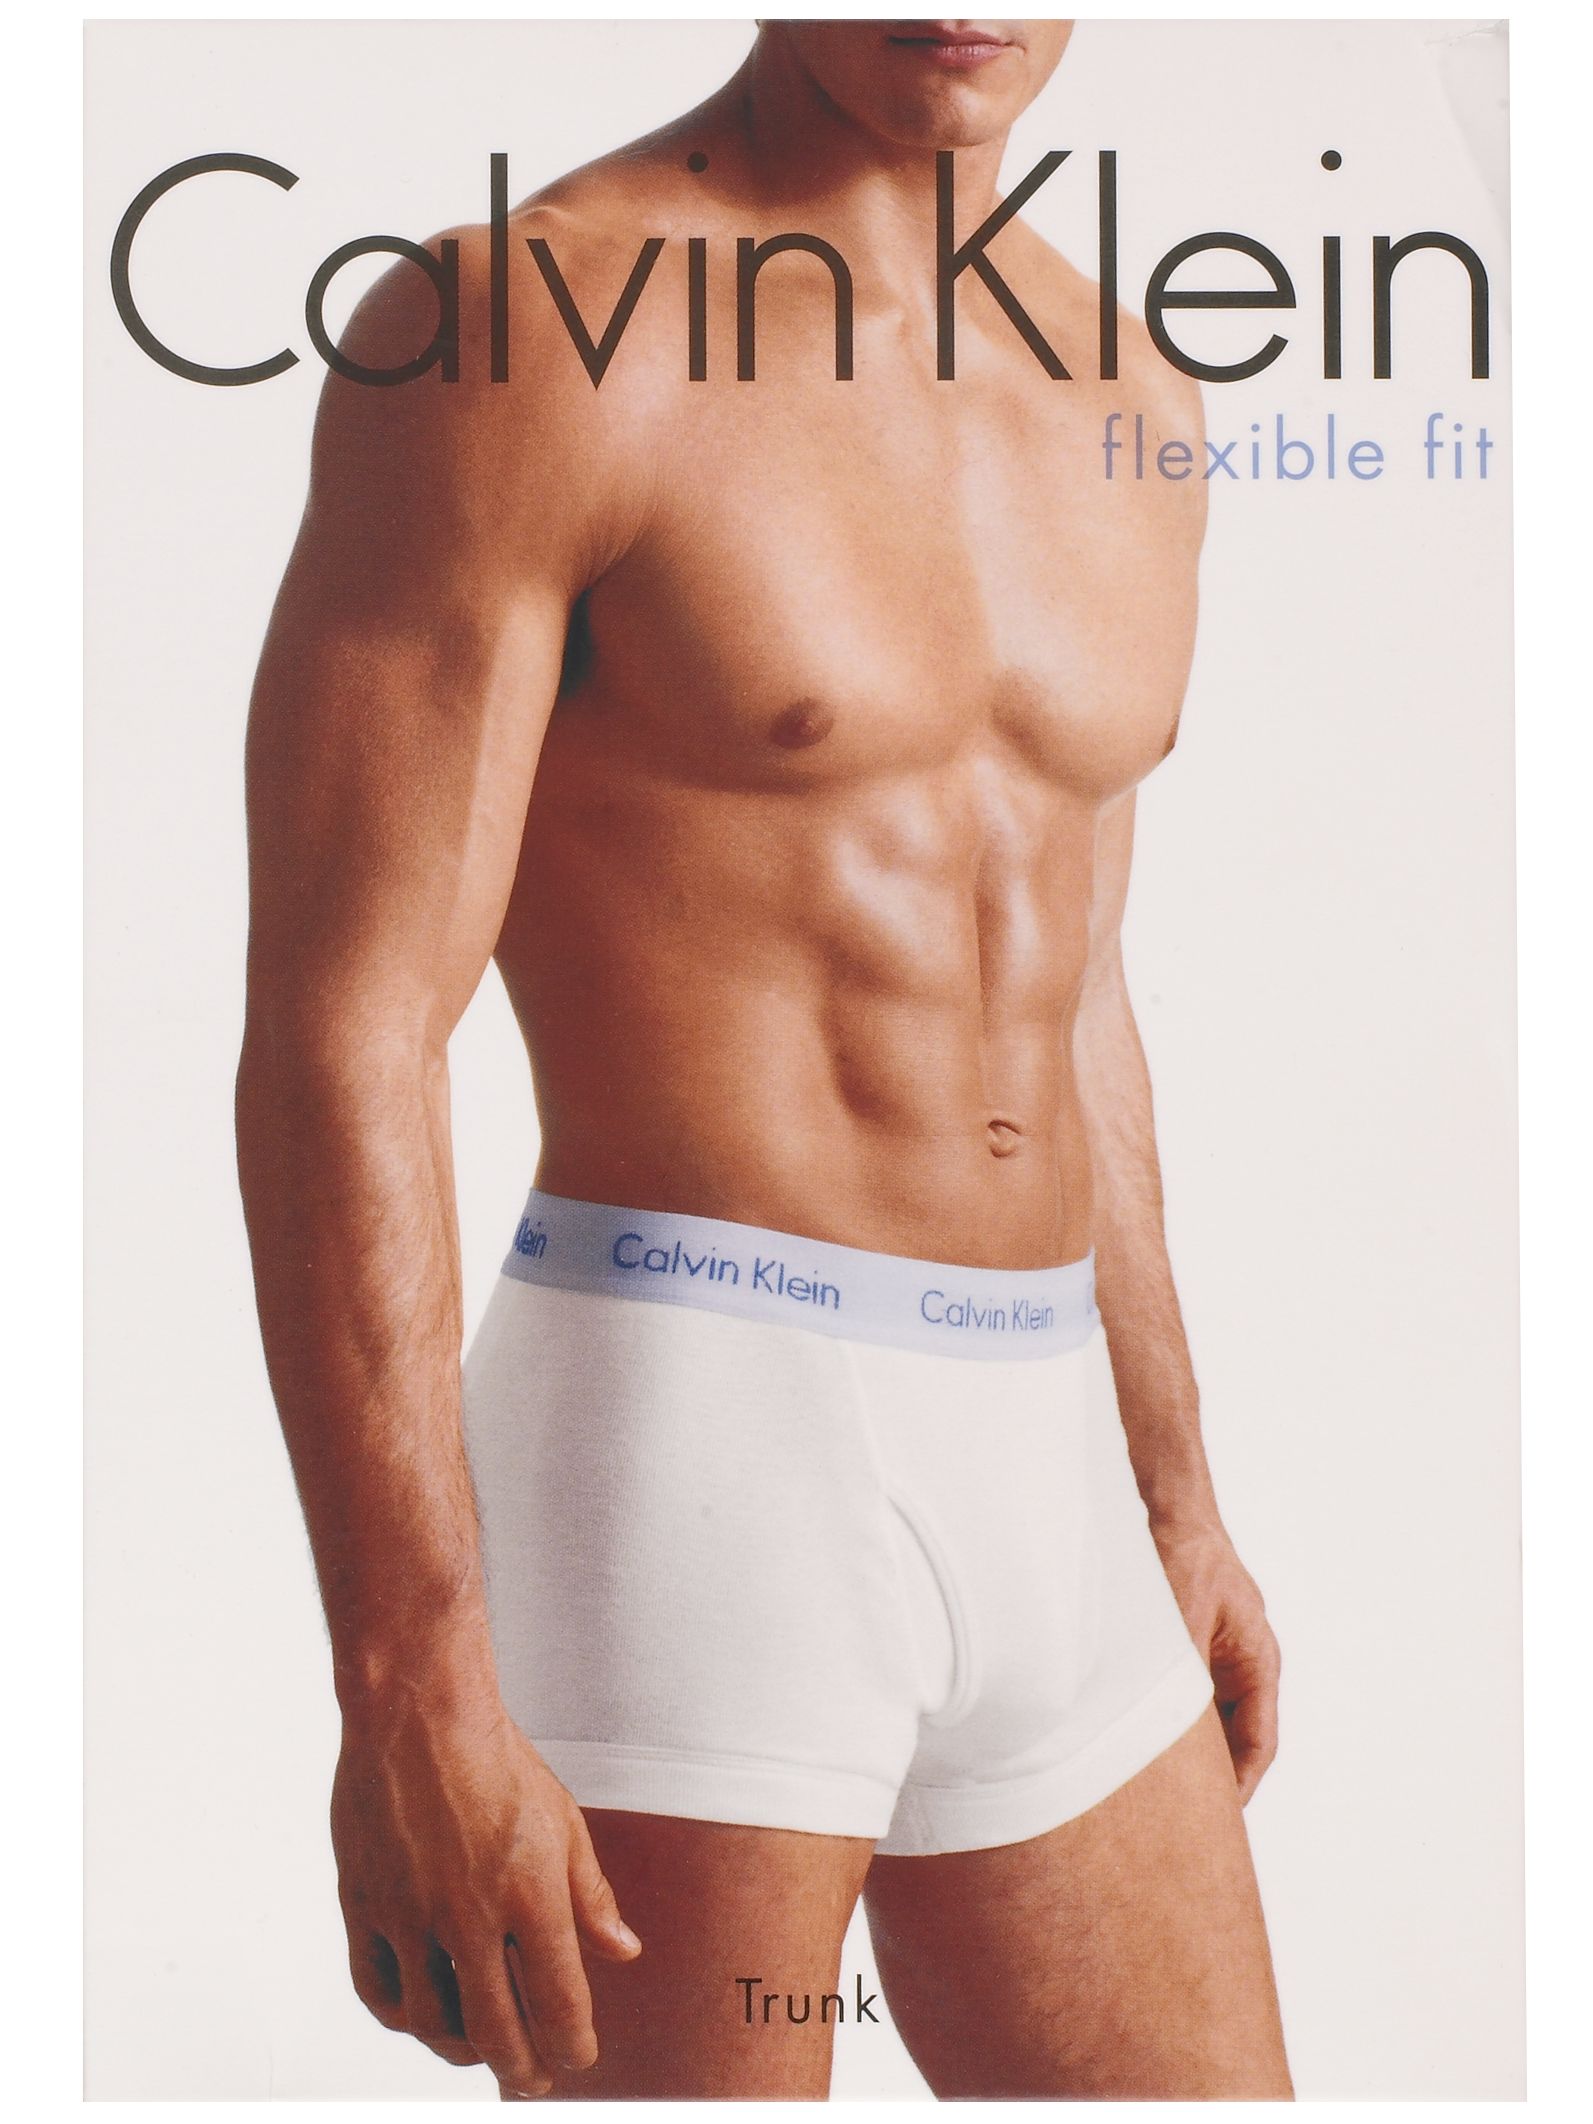 Calvin Klein Flexible Fit Trunks, Grey, Small